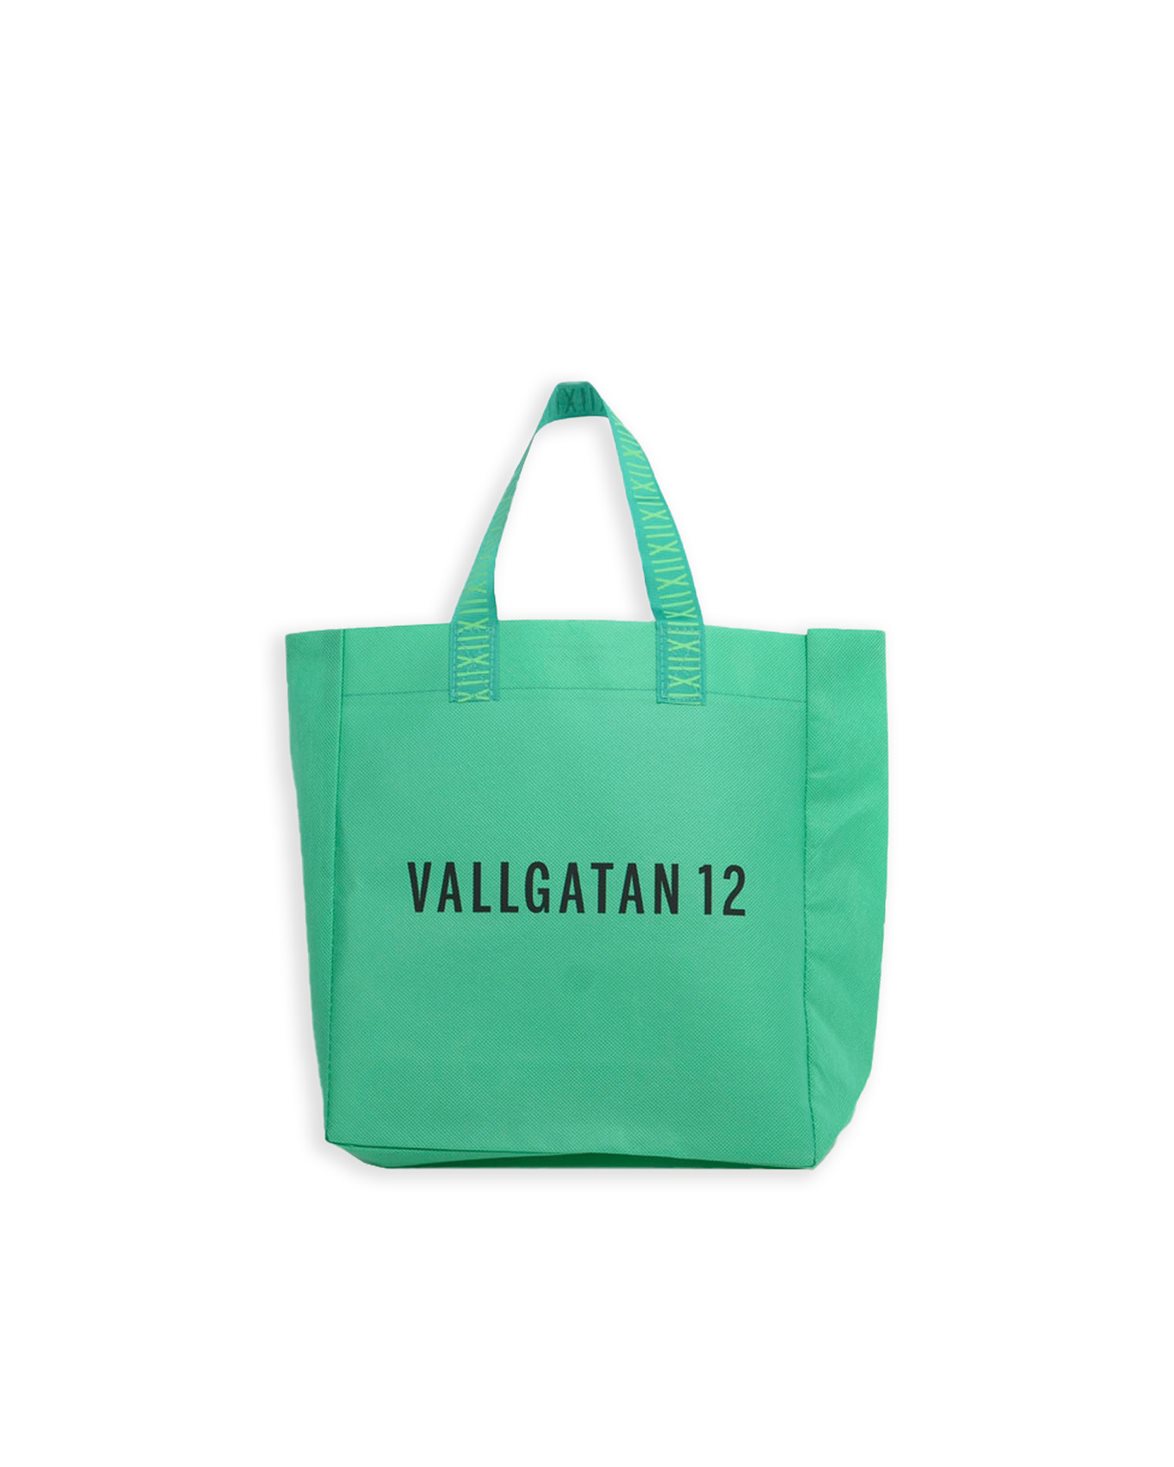 Vallgatan 12 - Shopping Bag